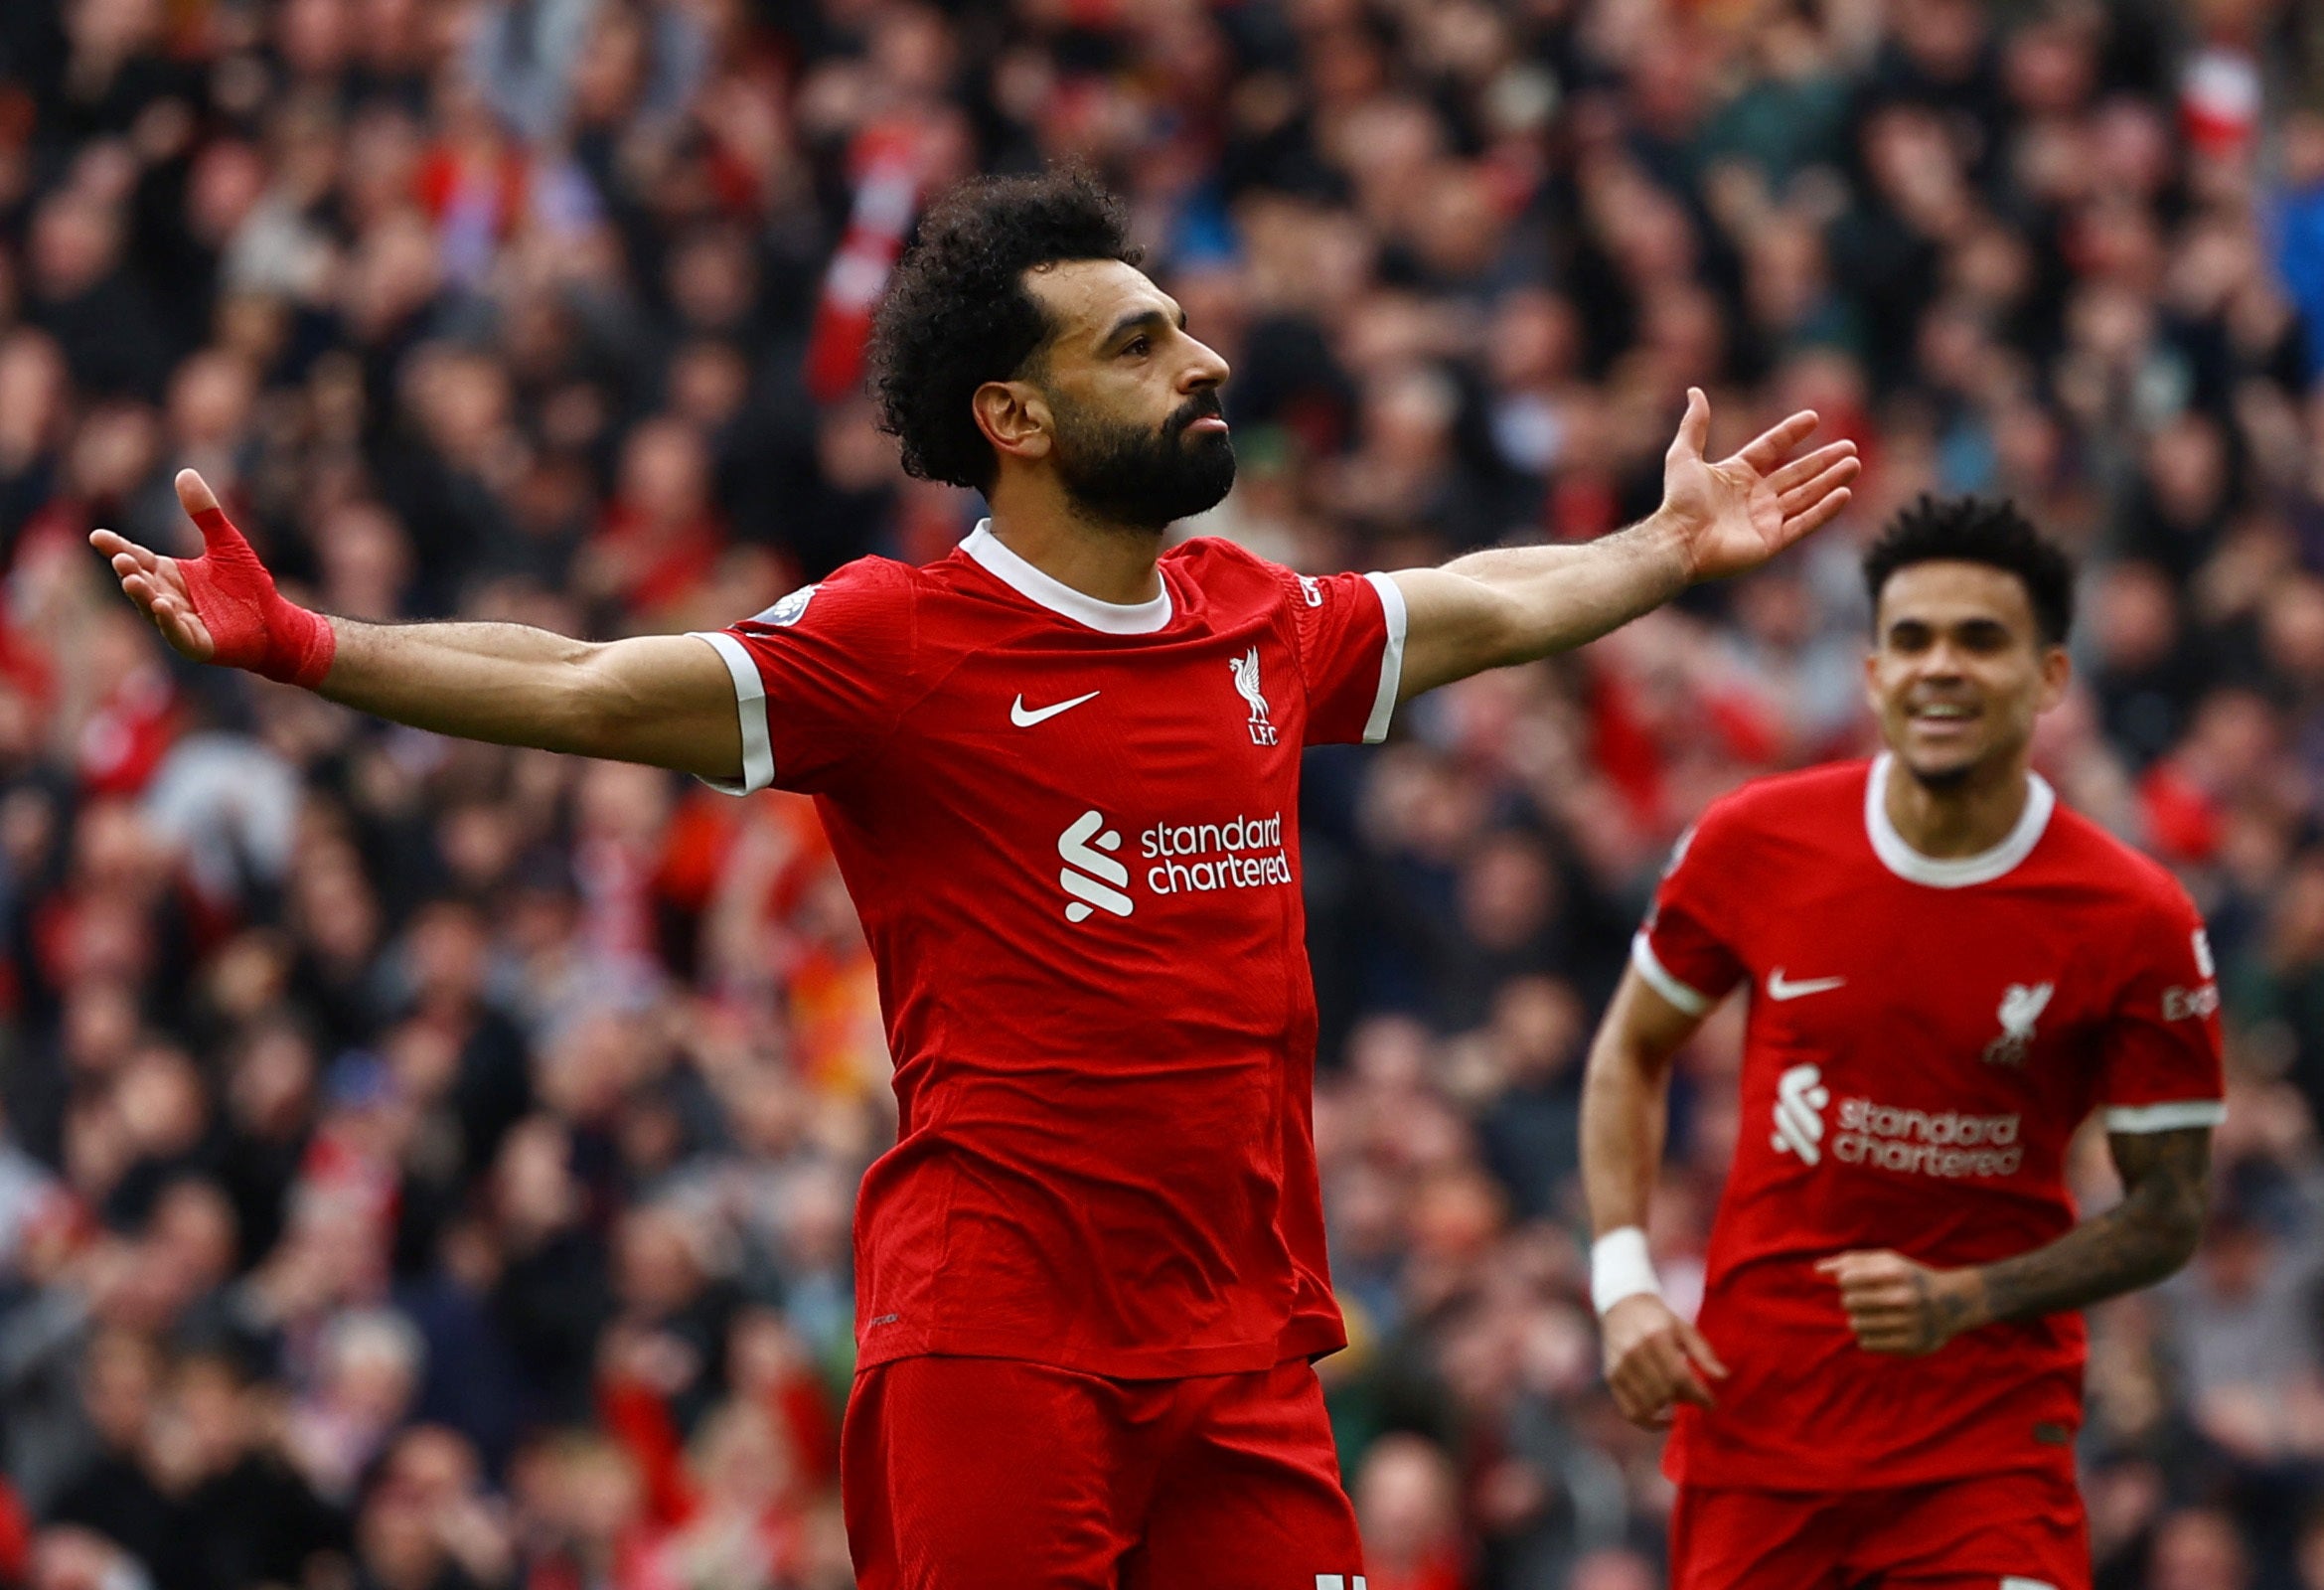 Liverpool 2-1 Brighton: Salah's strike secures vital win for Reds